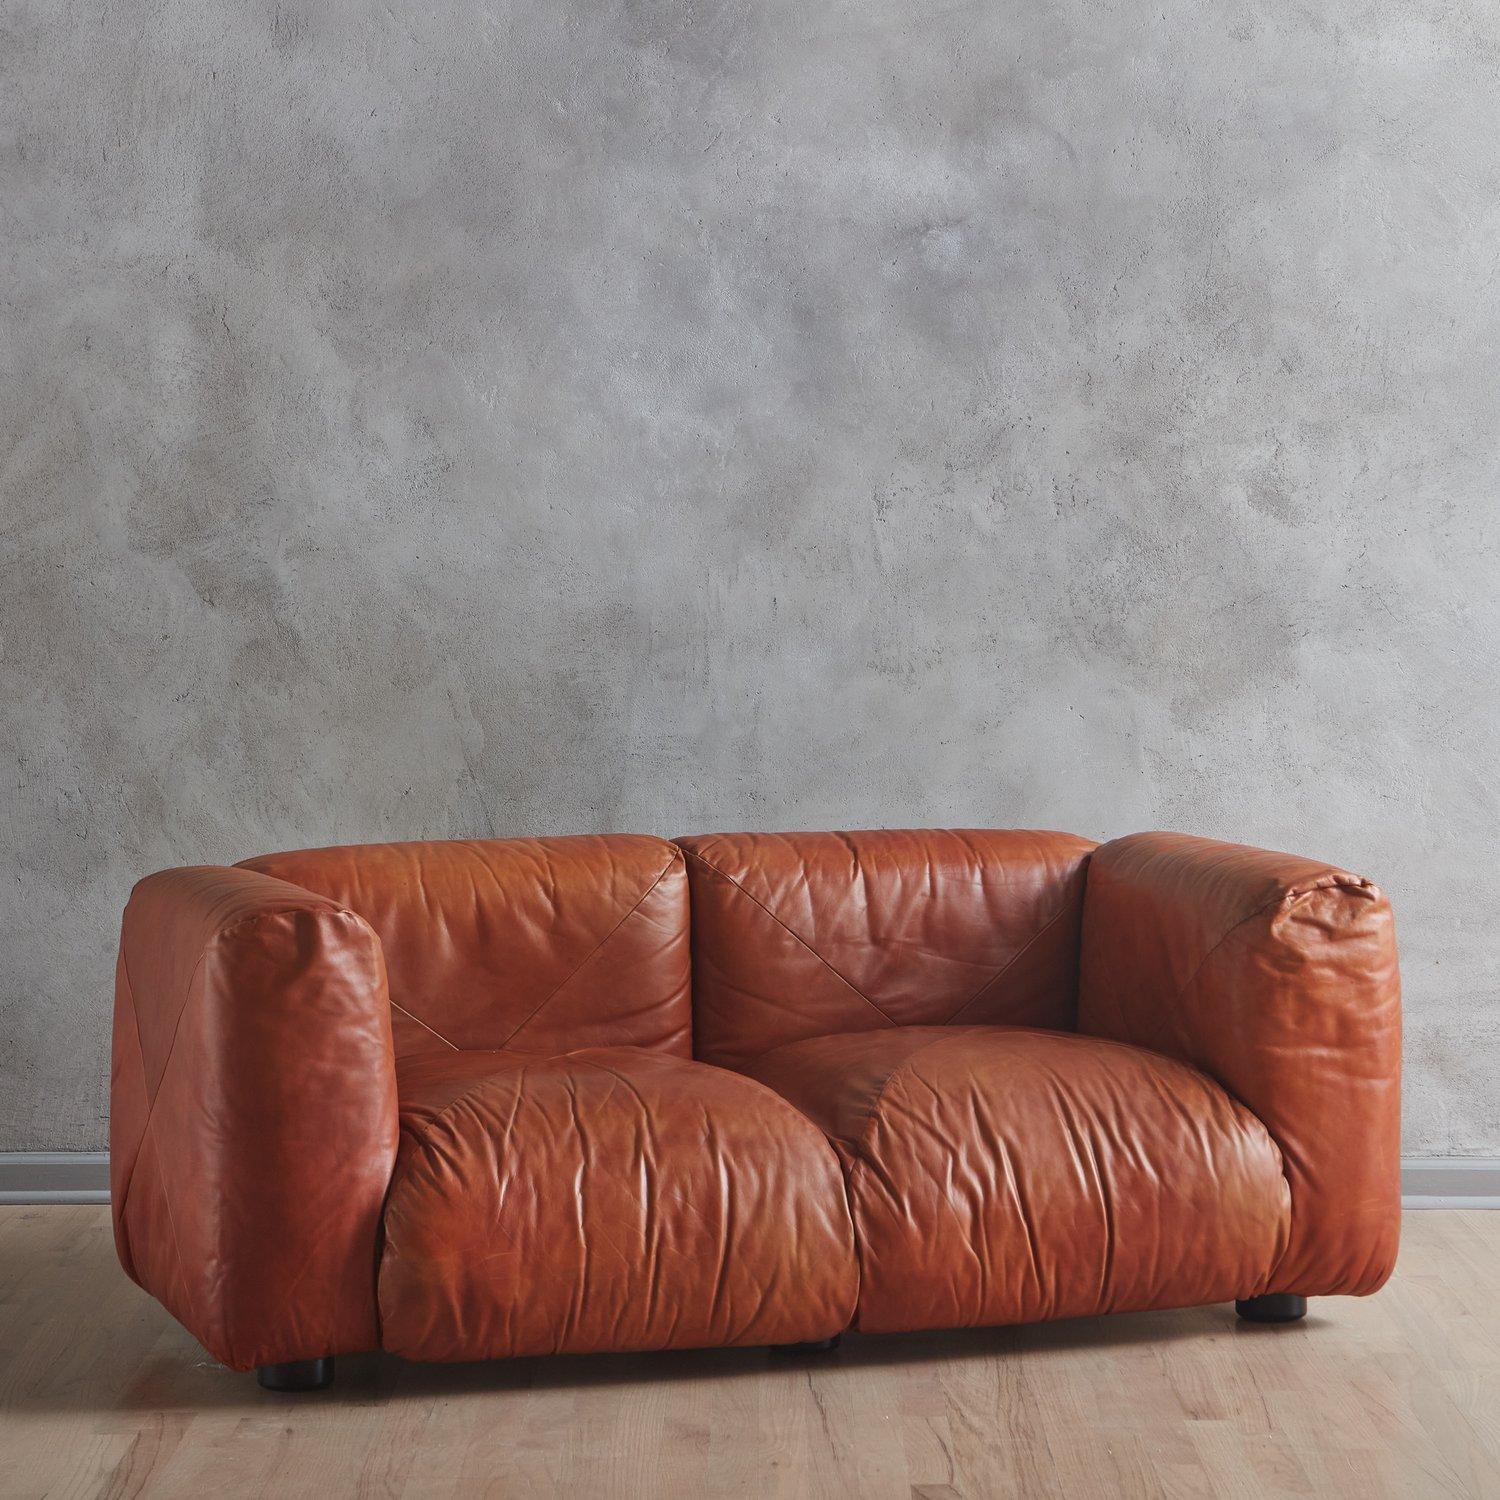 Mid-Century Modern Marenco Sofa in Original Cognac Leather by Mario Marenco for Arflex, Italy 1970s For Sale